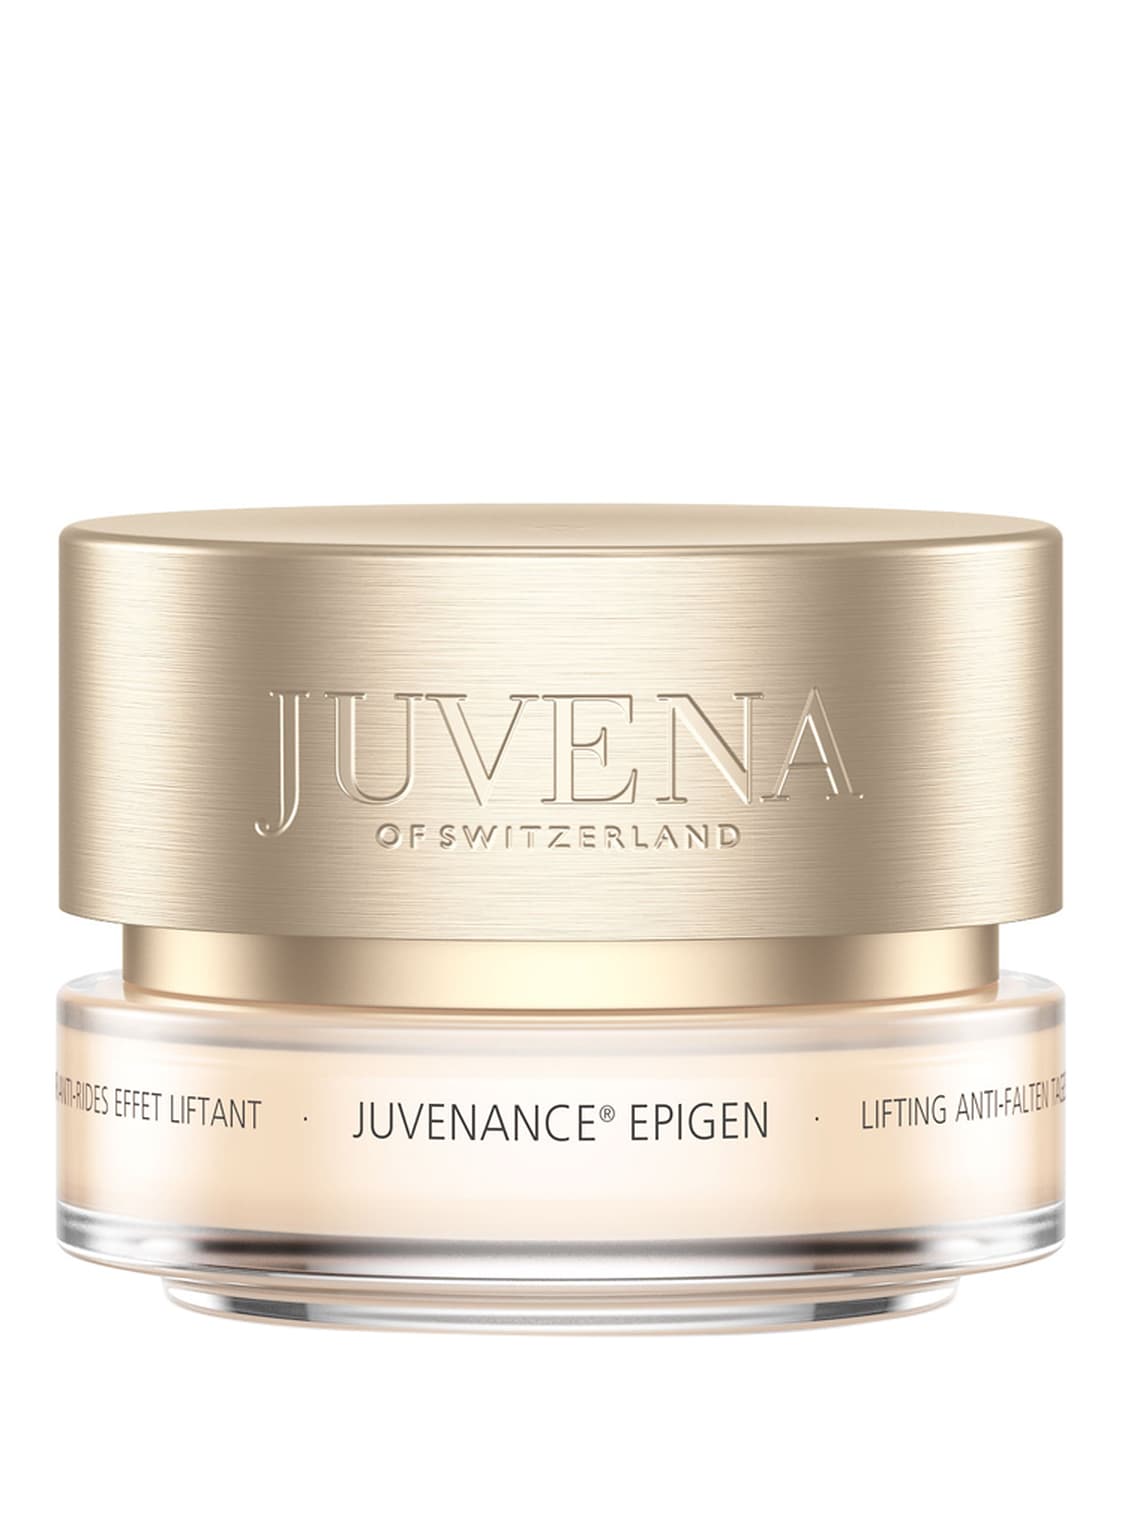 Image of Juvena Juvenance Epigen Day Cream 50 ml